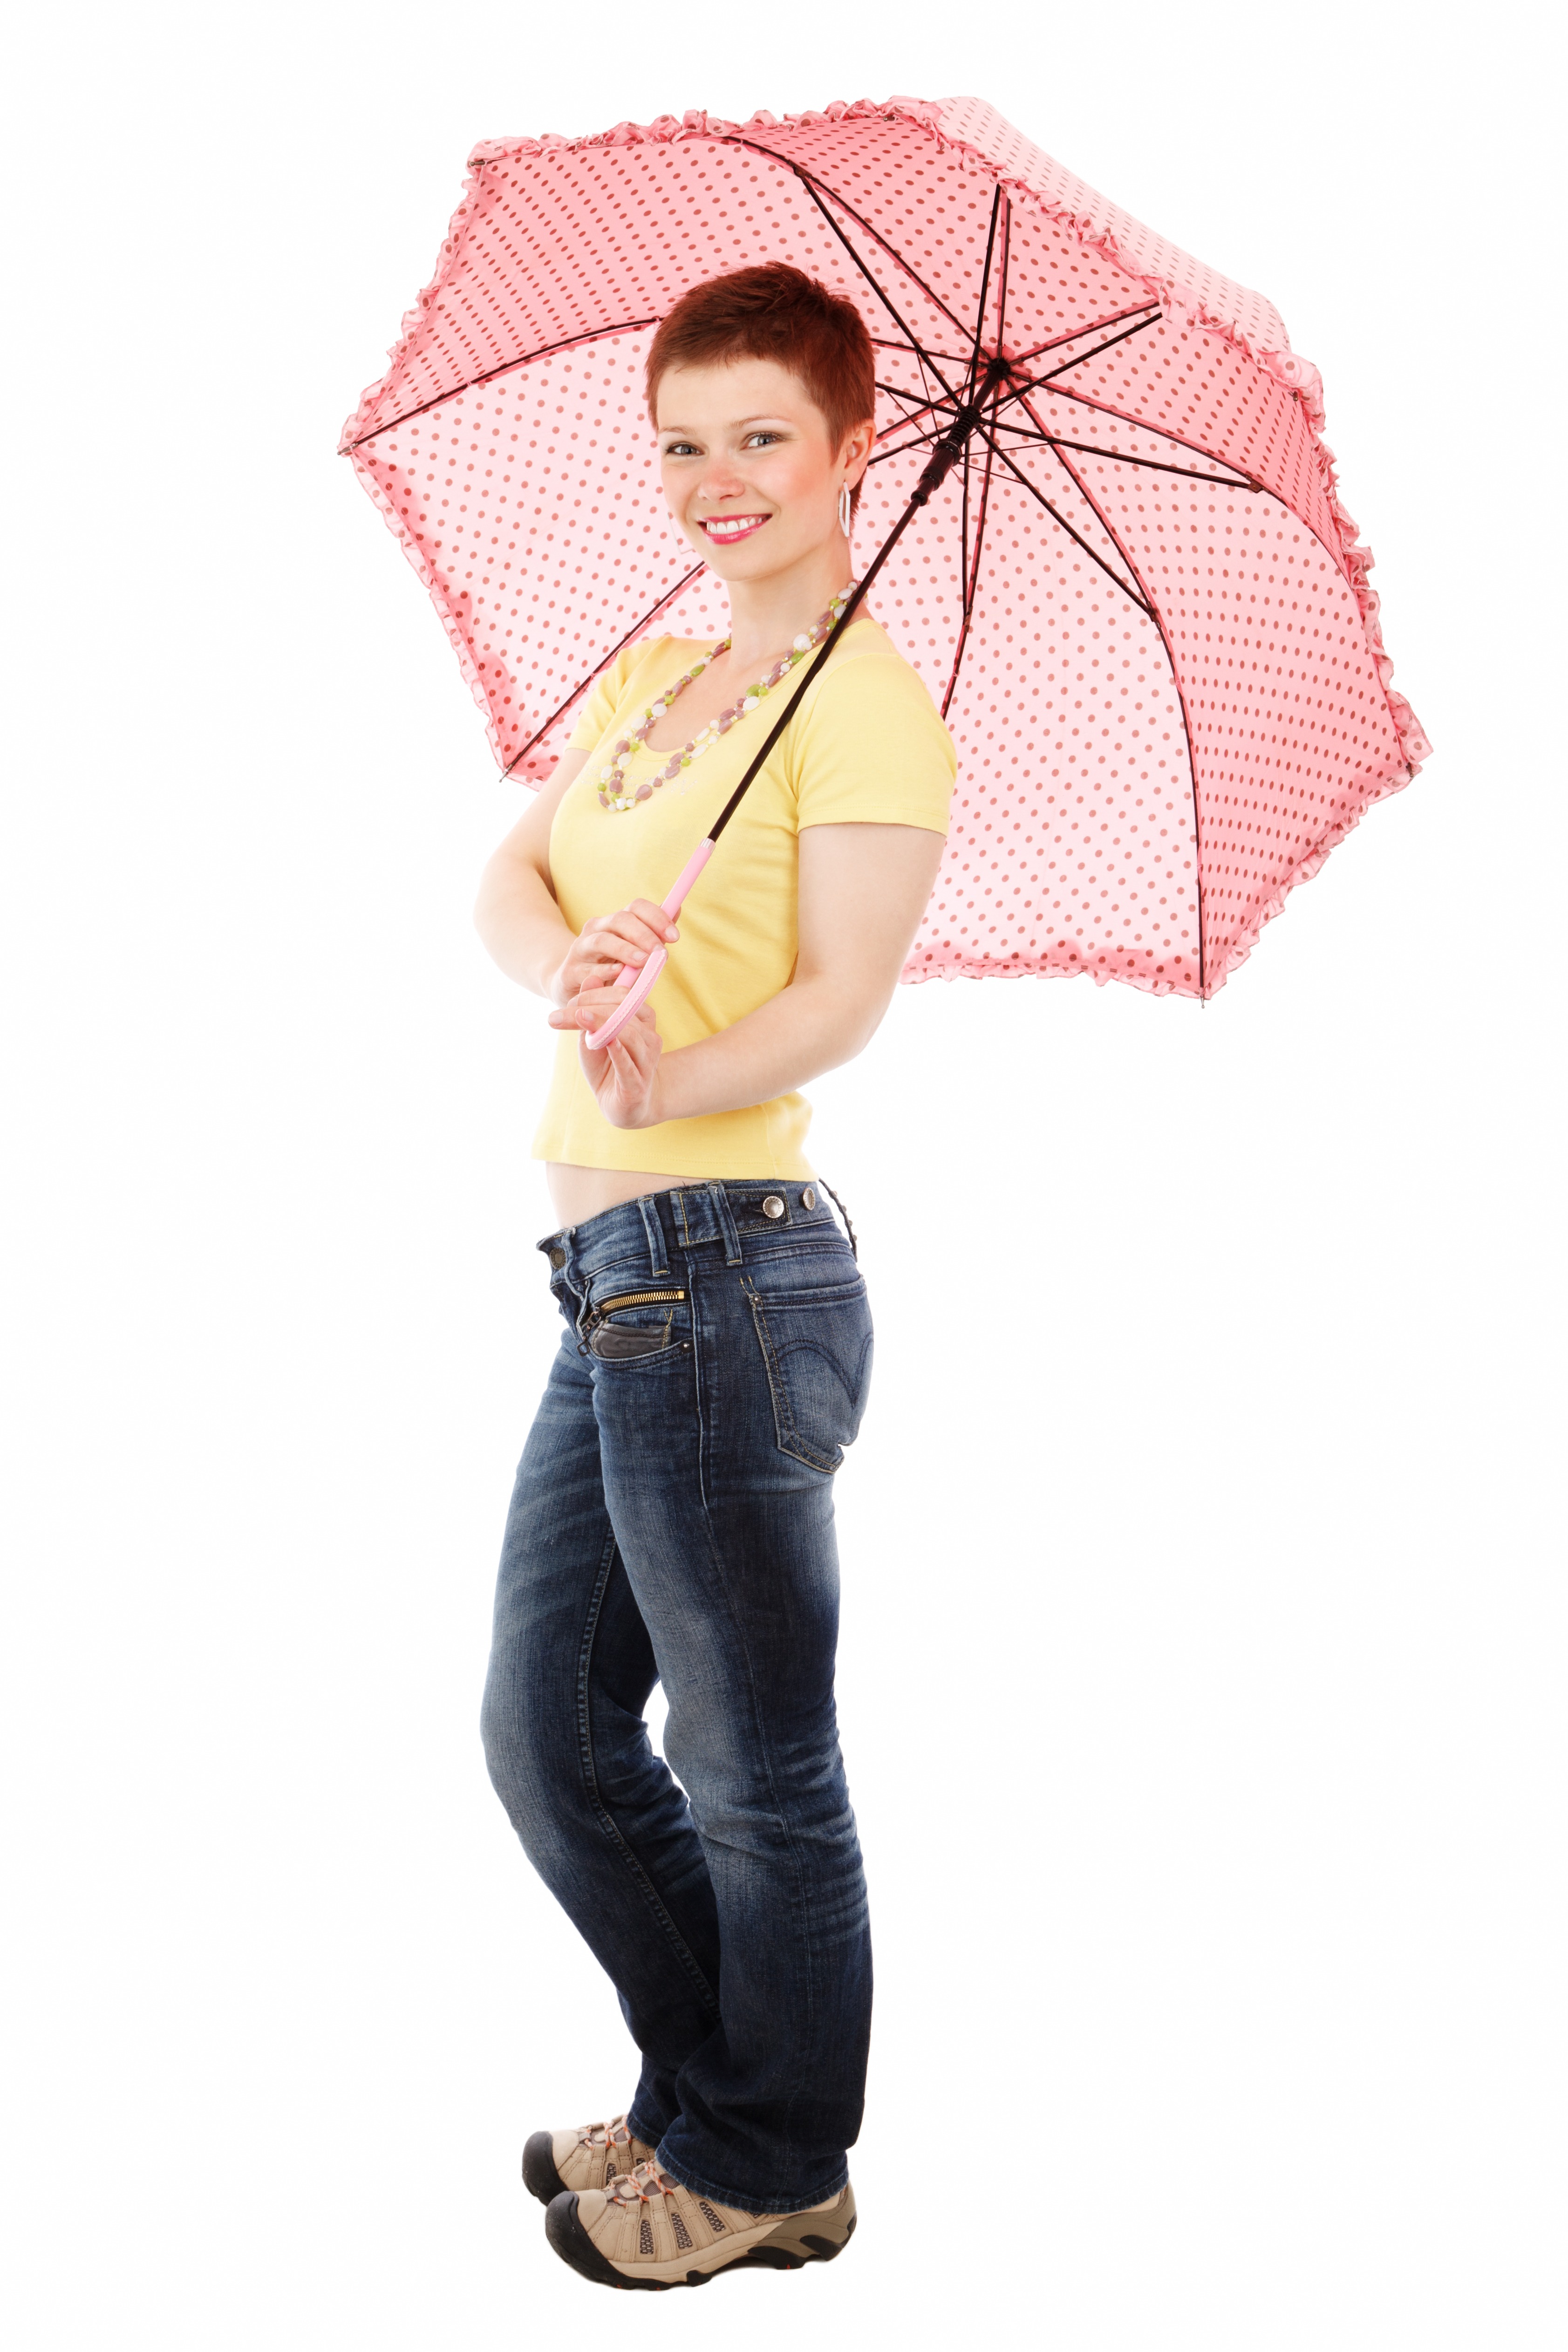 Girl with umbrella photo